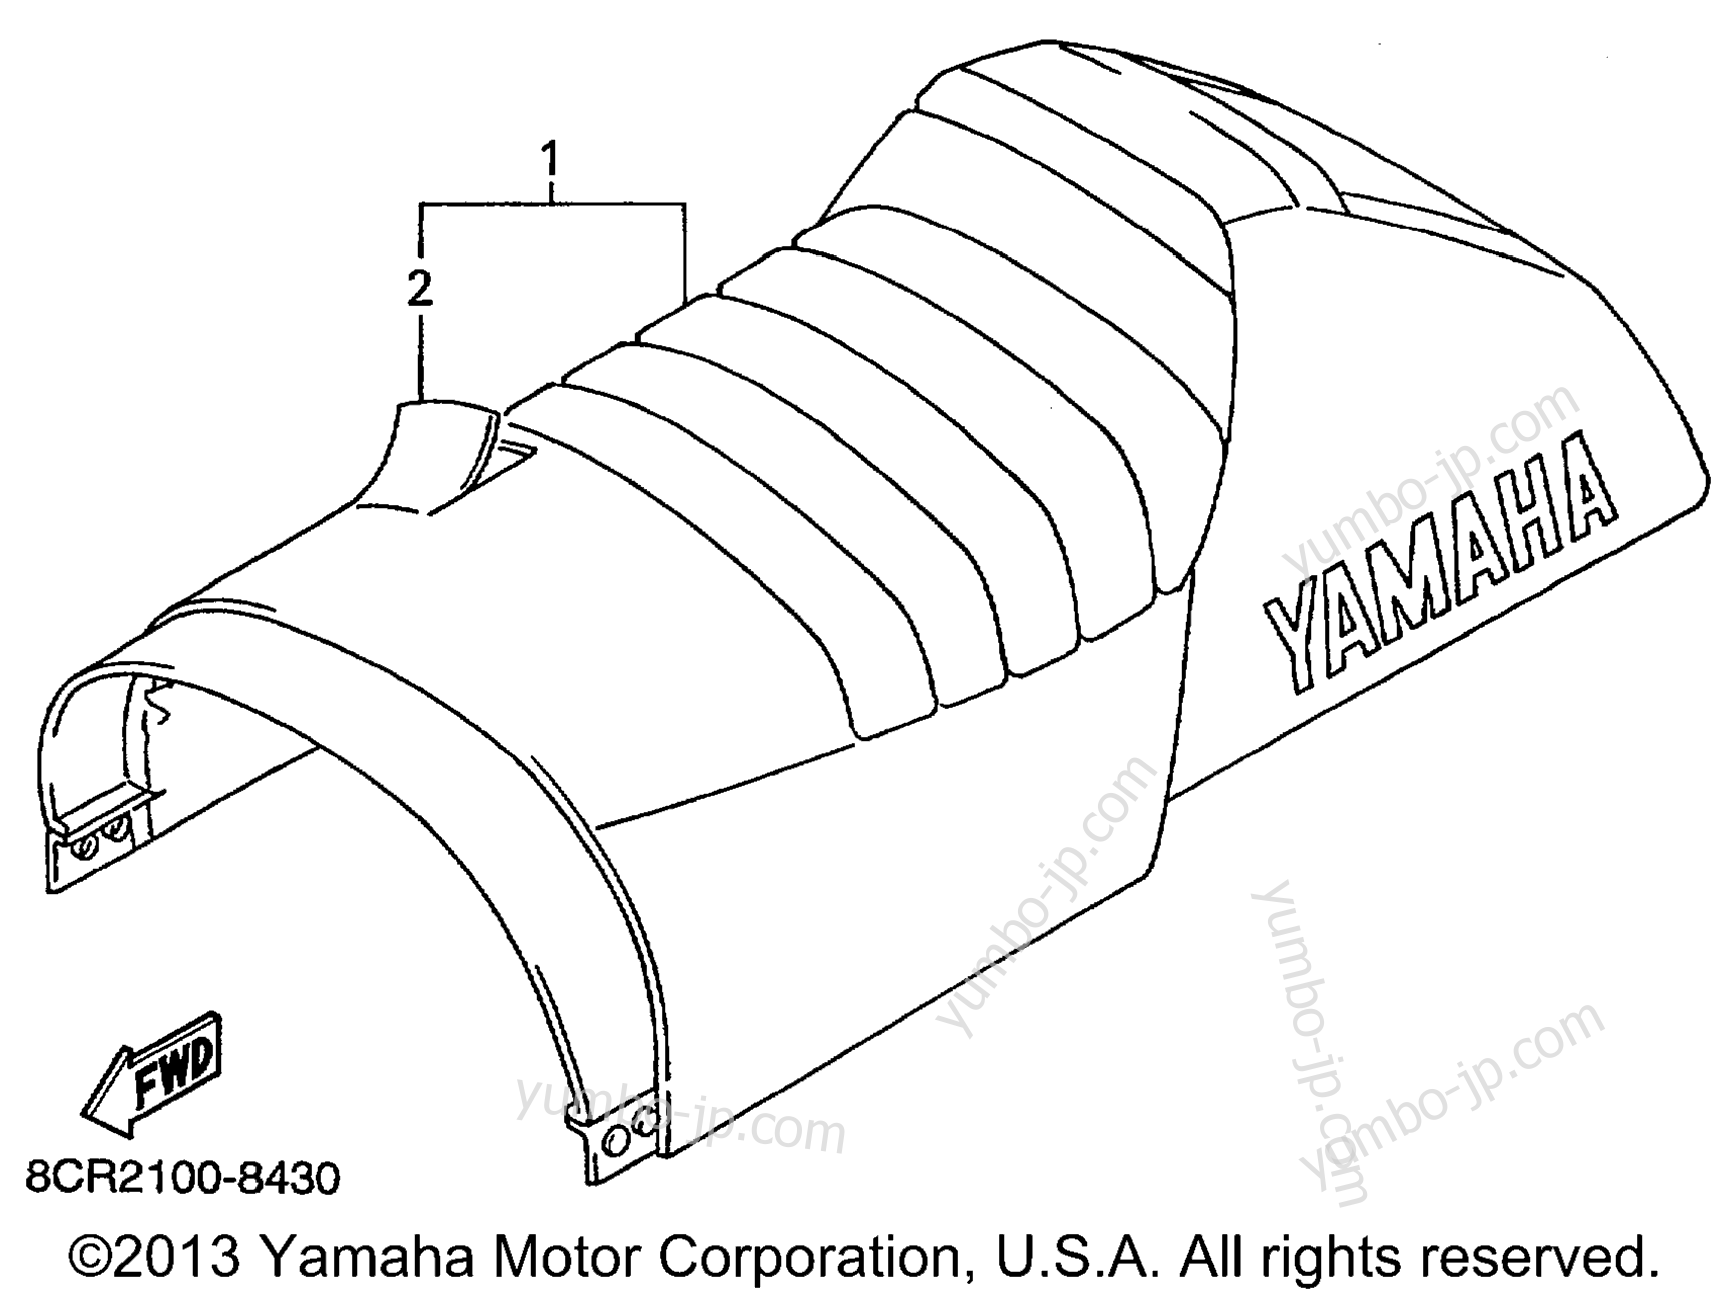 Alternate Single Seat для снегоходов YAMAHA VMAX 600 XTR (ELEC START+REVERSE) (VX600XTRB) 1998 г.